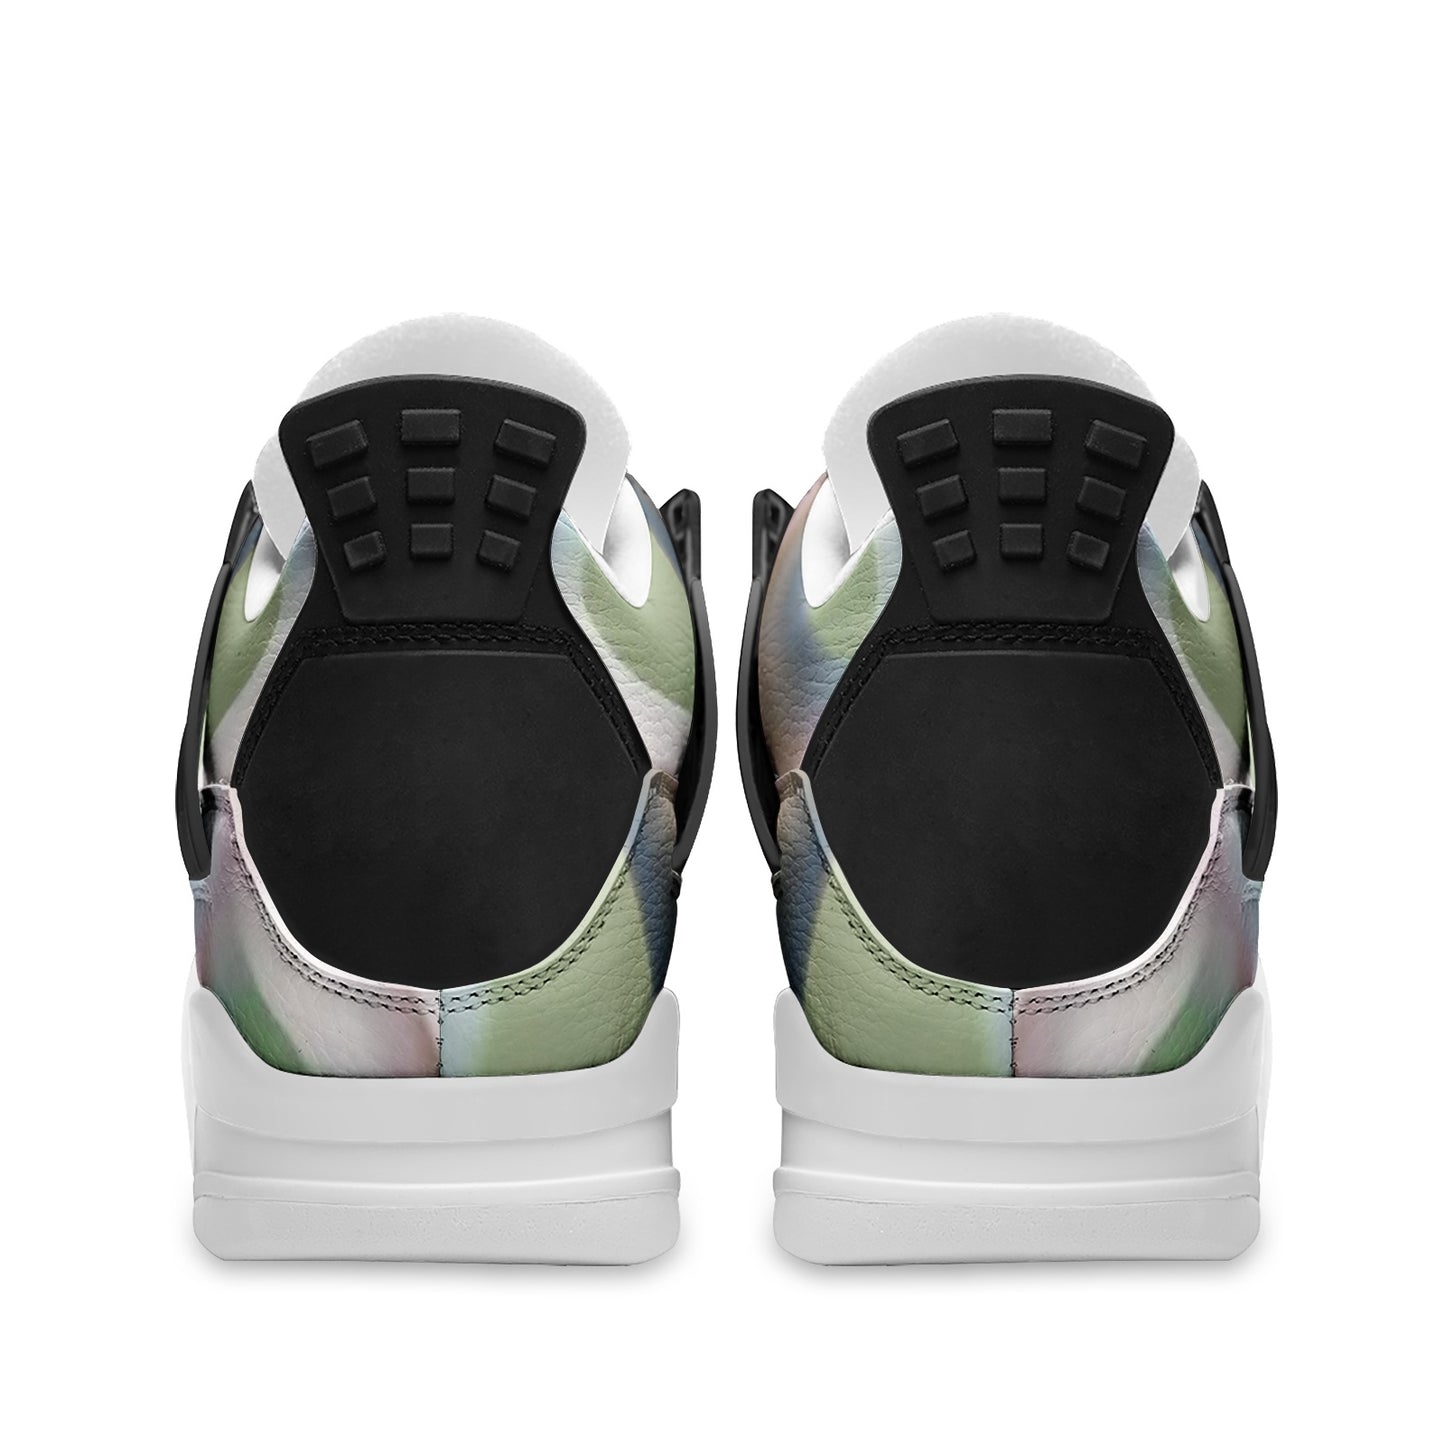 shons cream green camo Unisex Non Slip Lace Up Breathable Fashion Sneakers